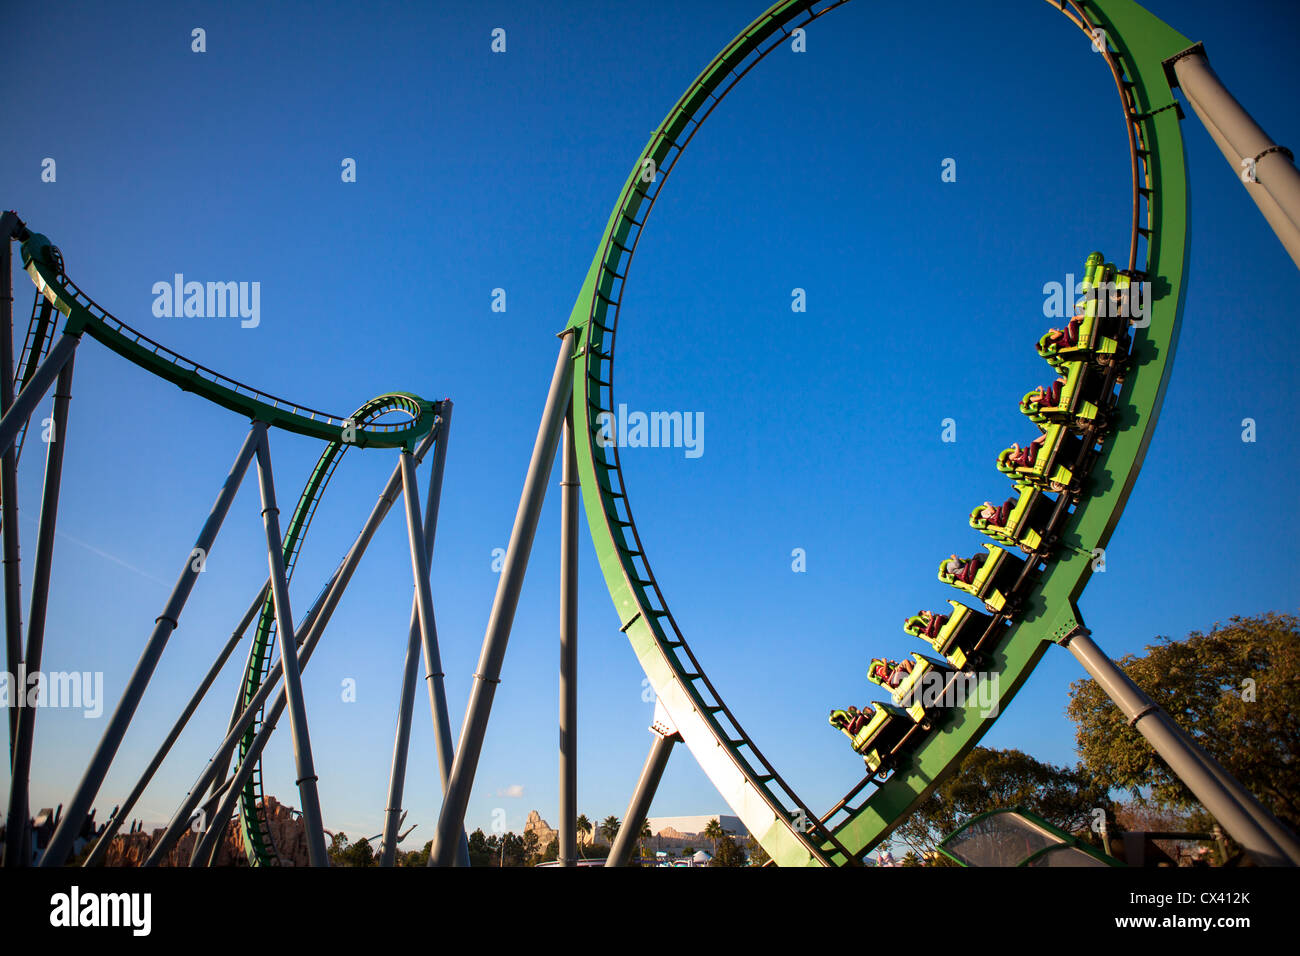 Hulk Rollercoaster Universal studios theme park Orlando Florida USA Stock Photo